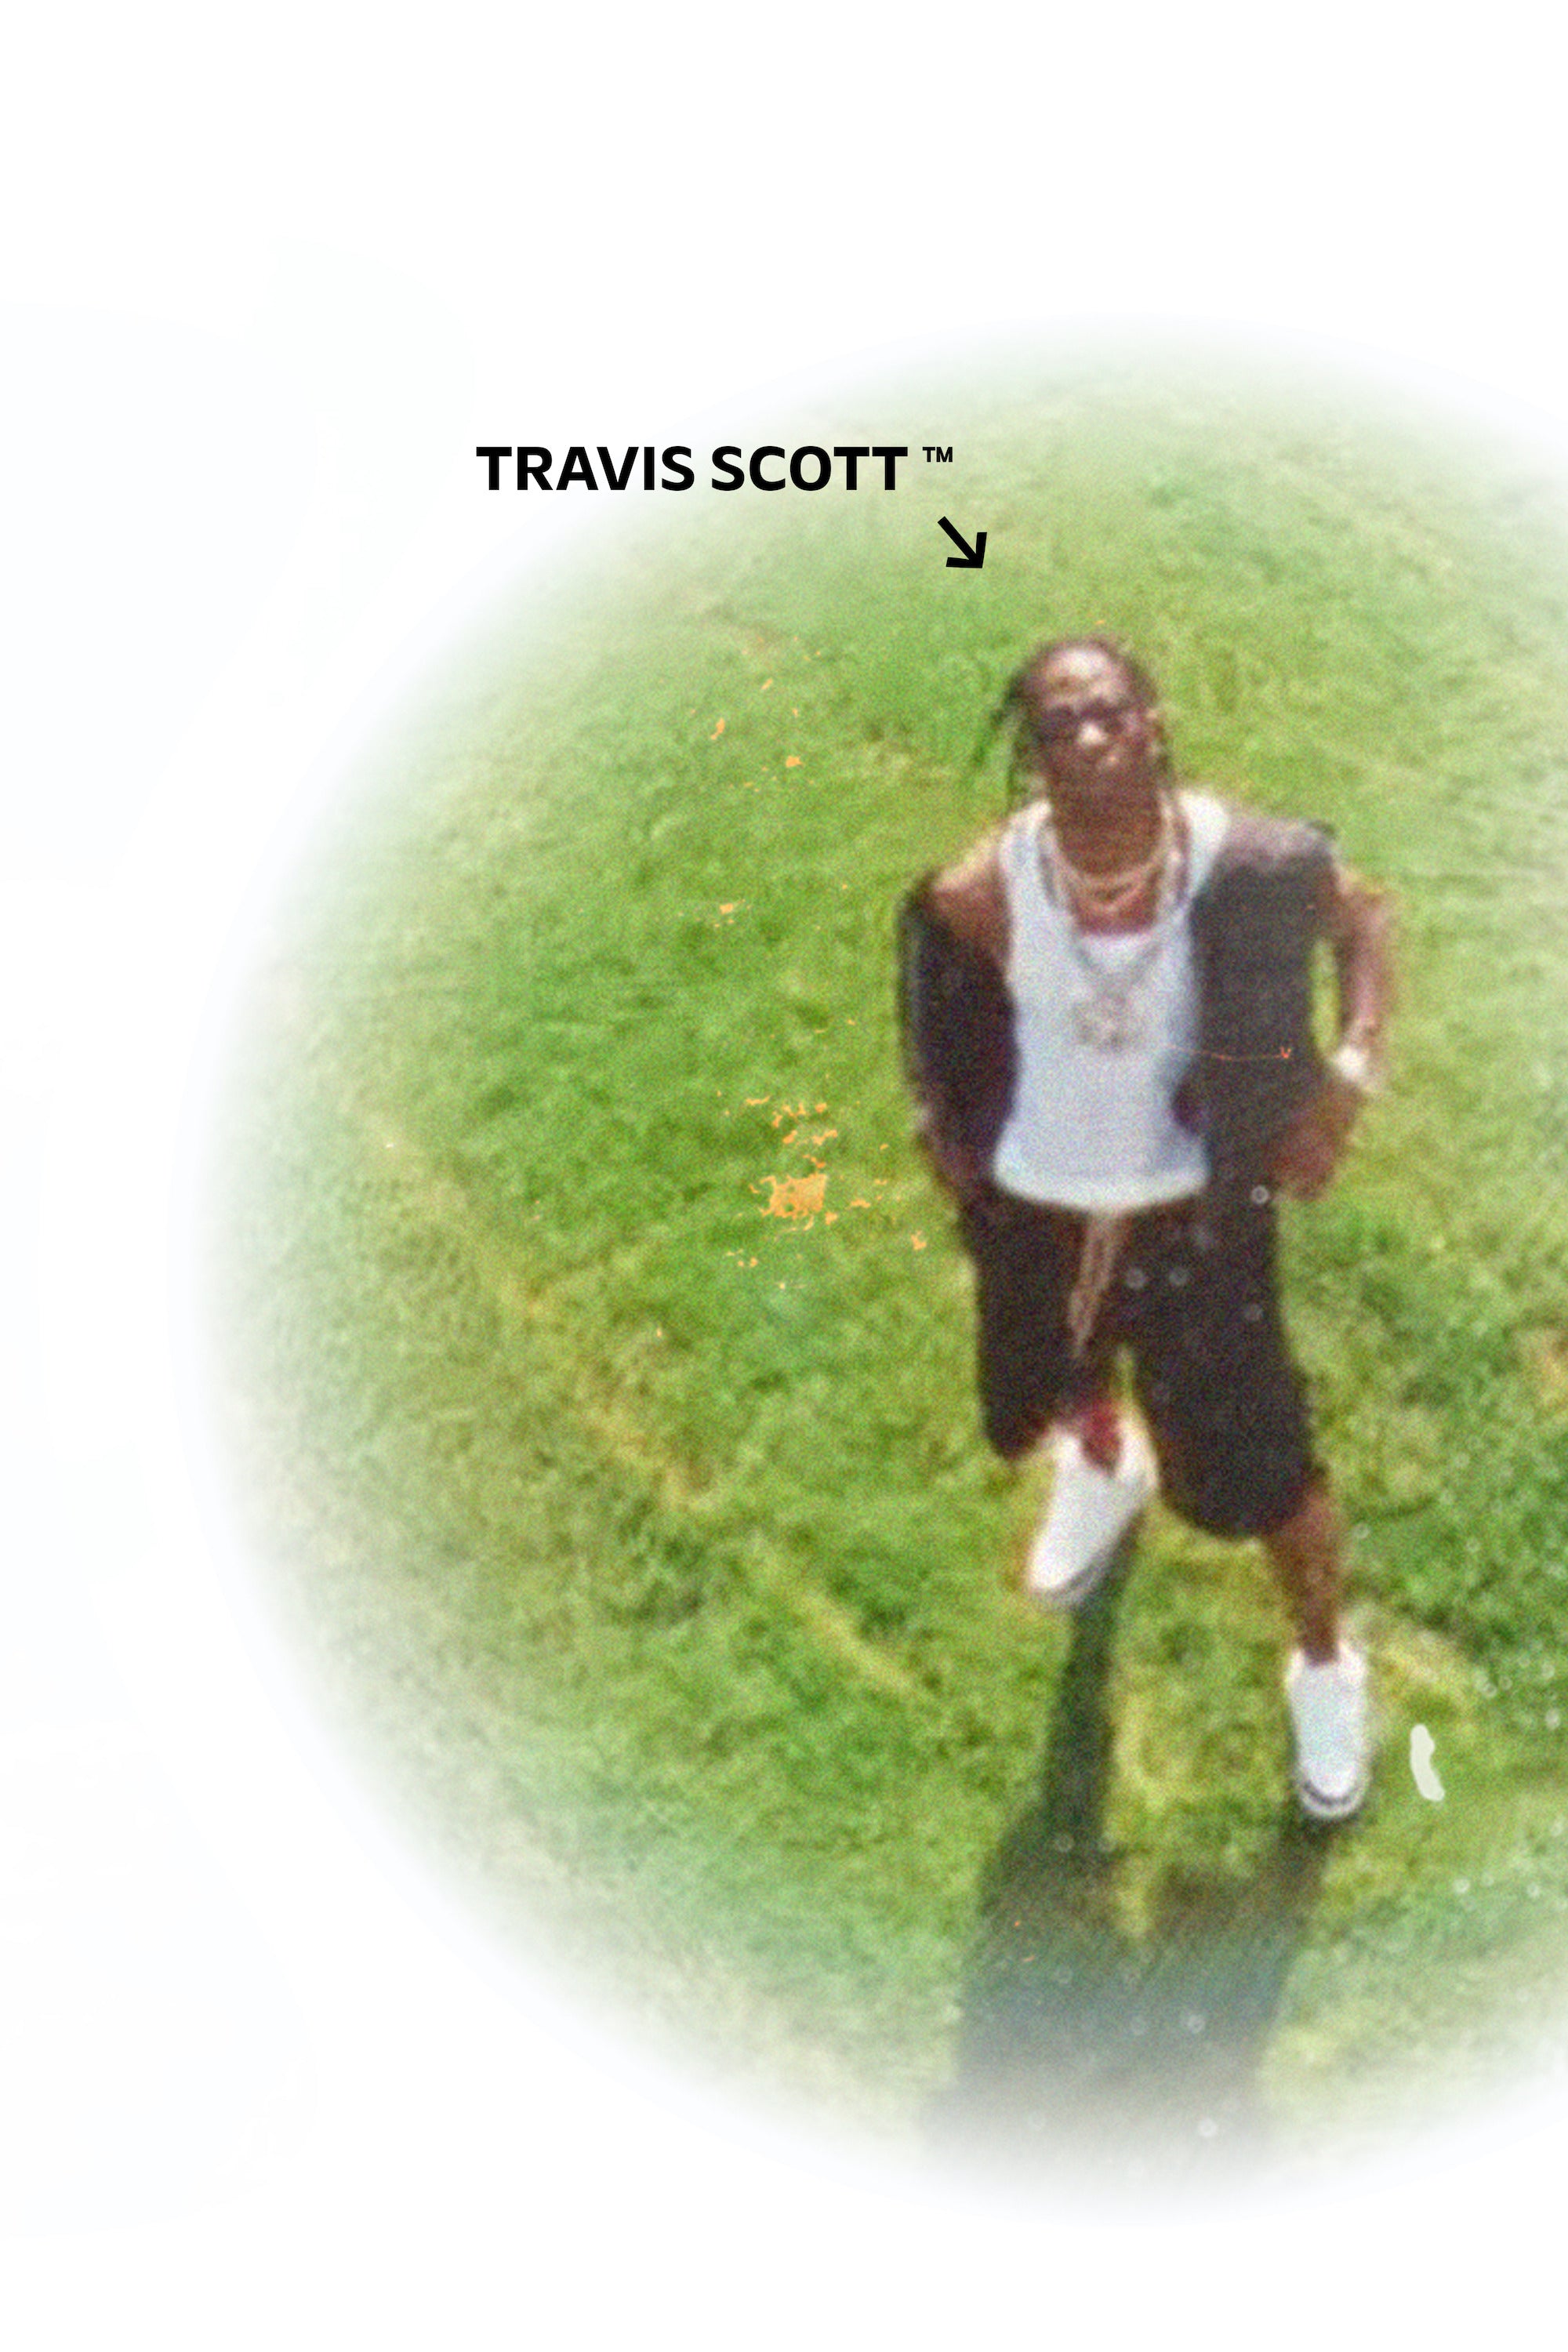 Travis Scott 'Blurred Vision' Poster